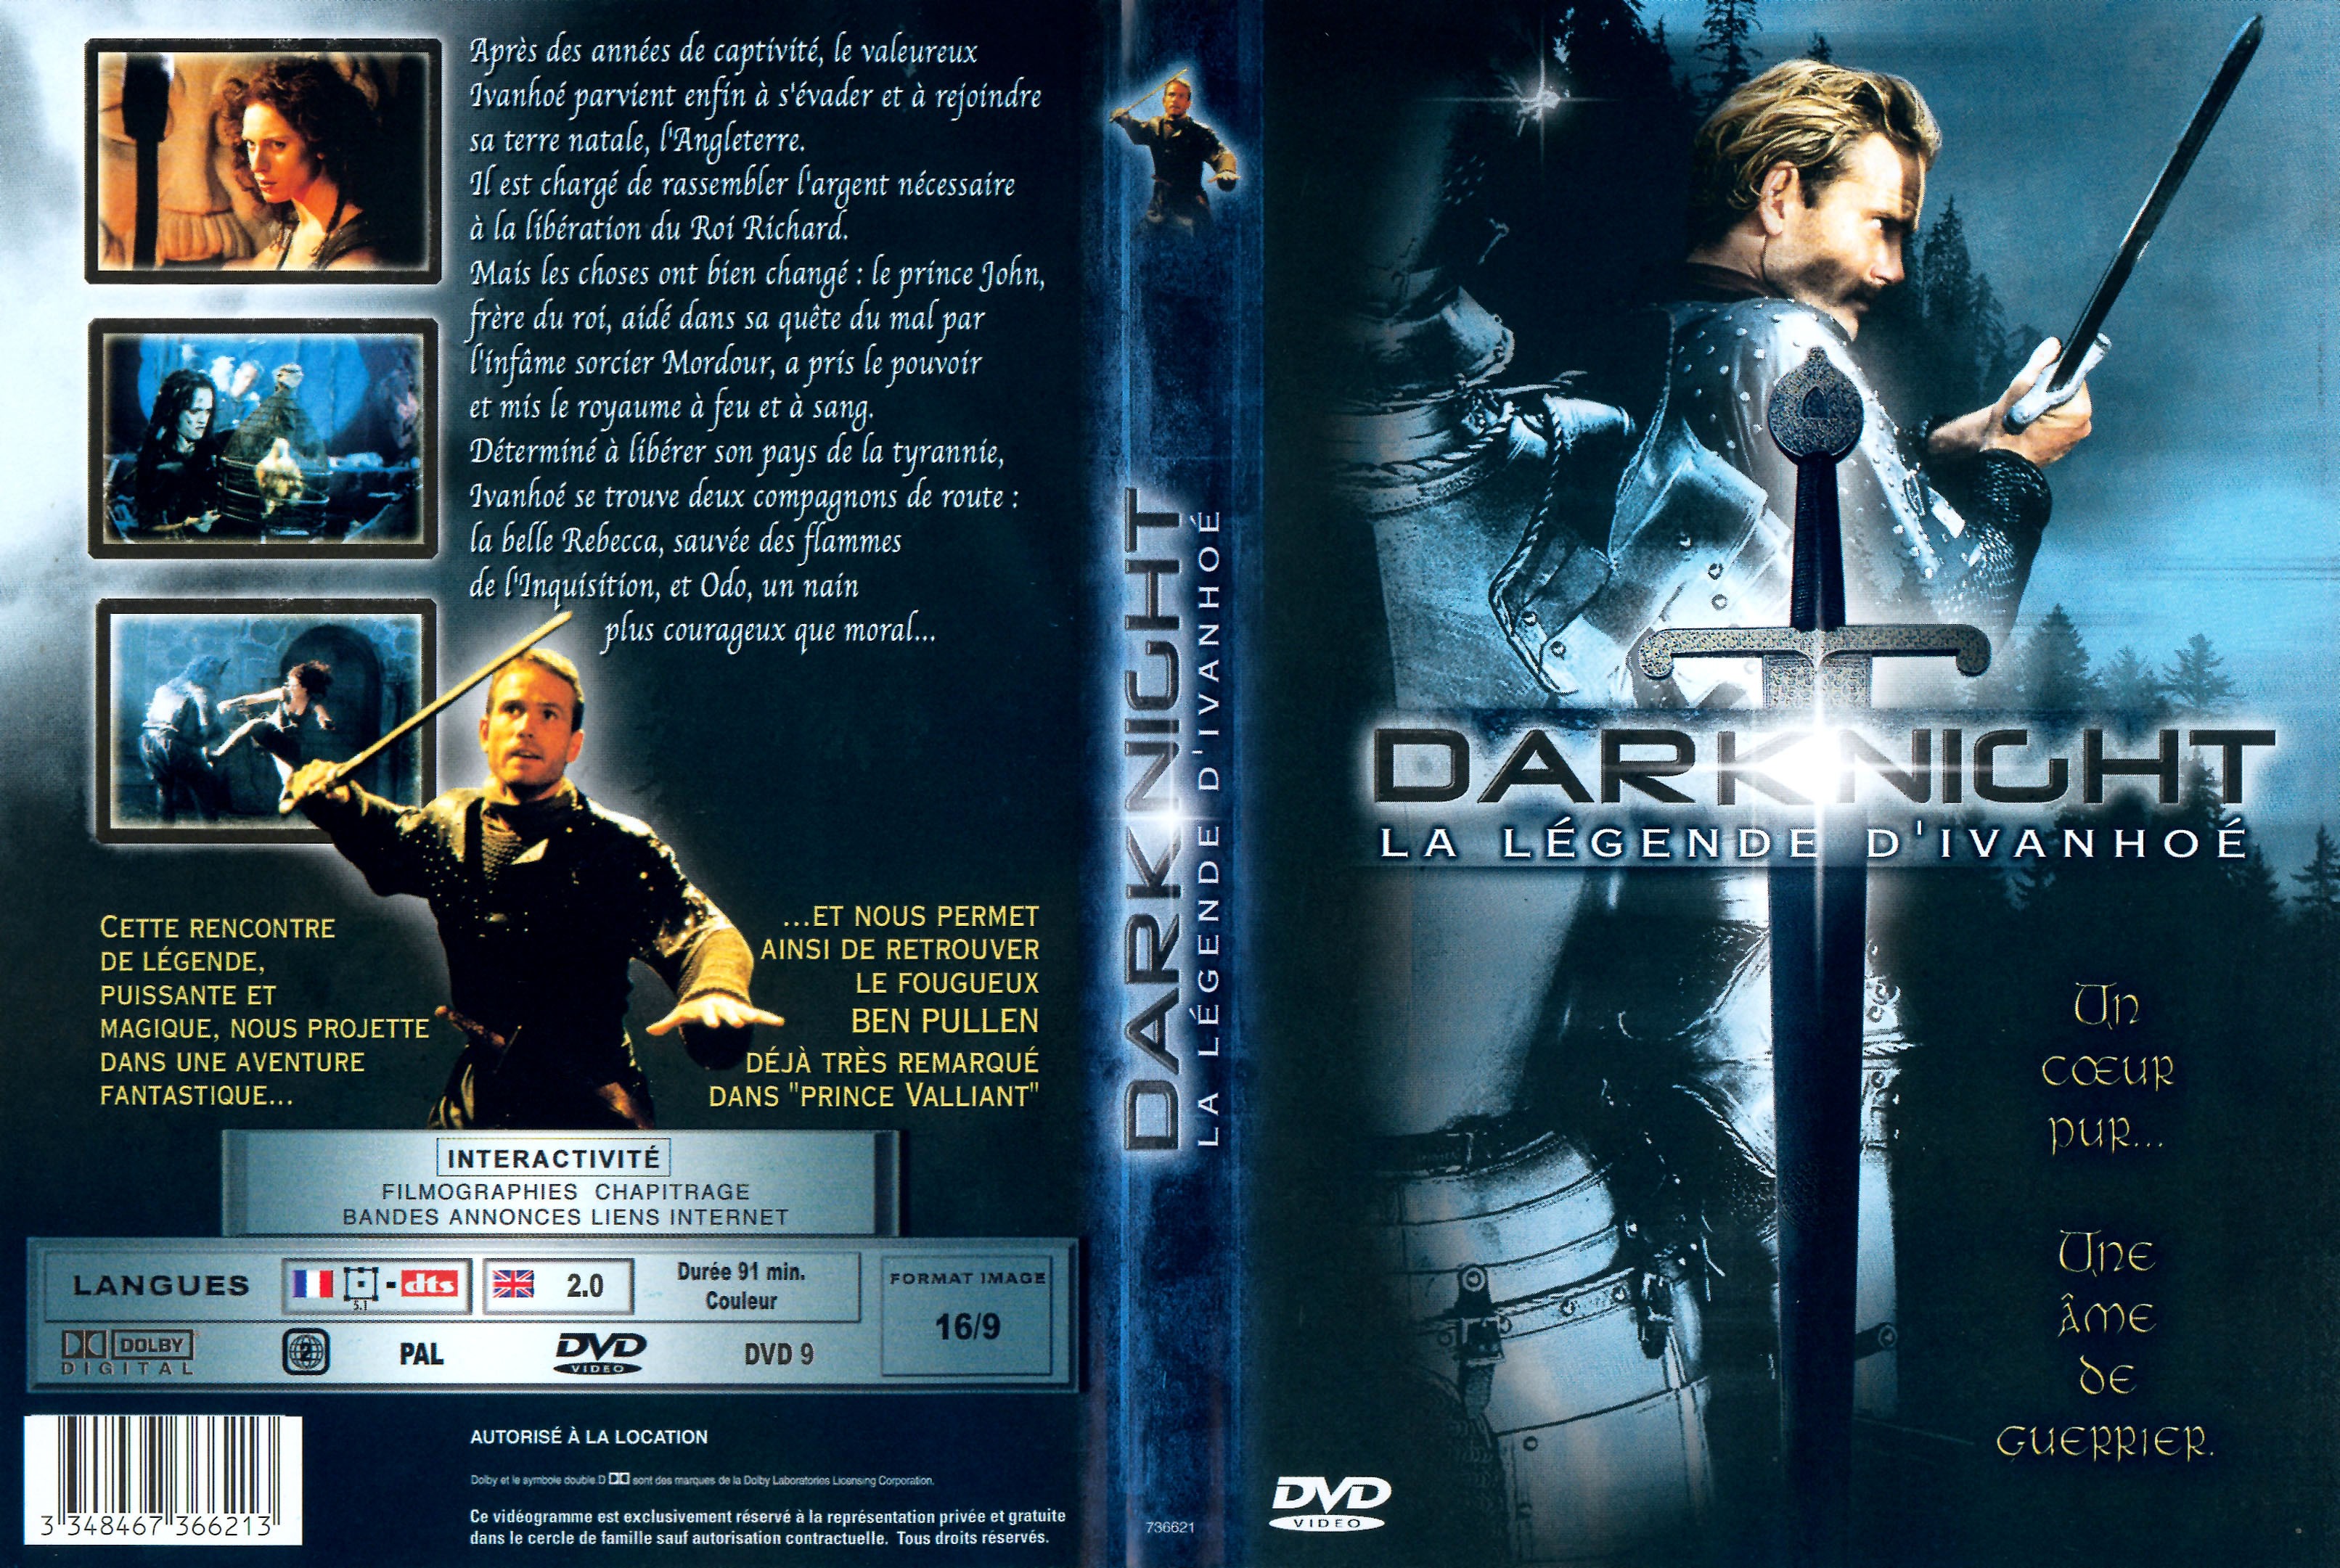 Jaquette DVD Darknight la legende d